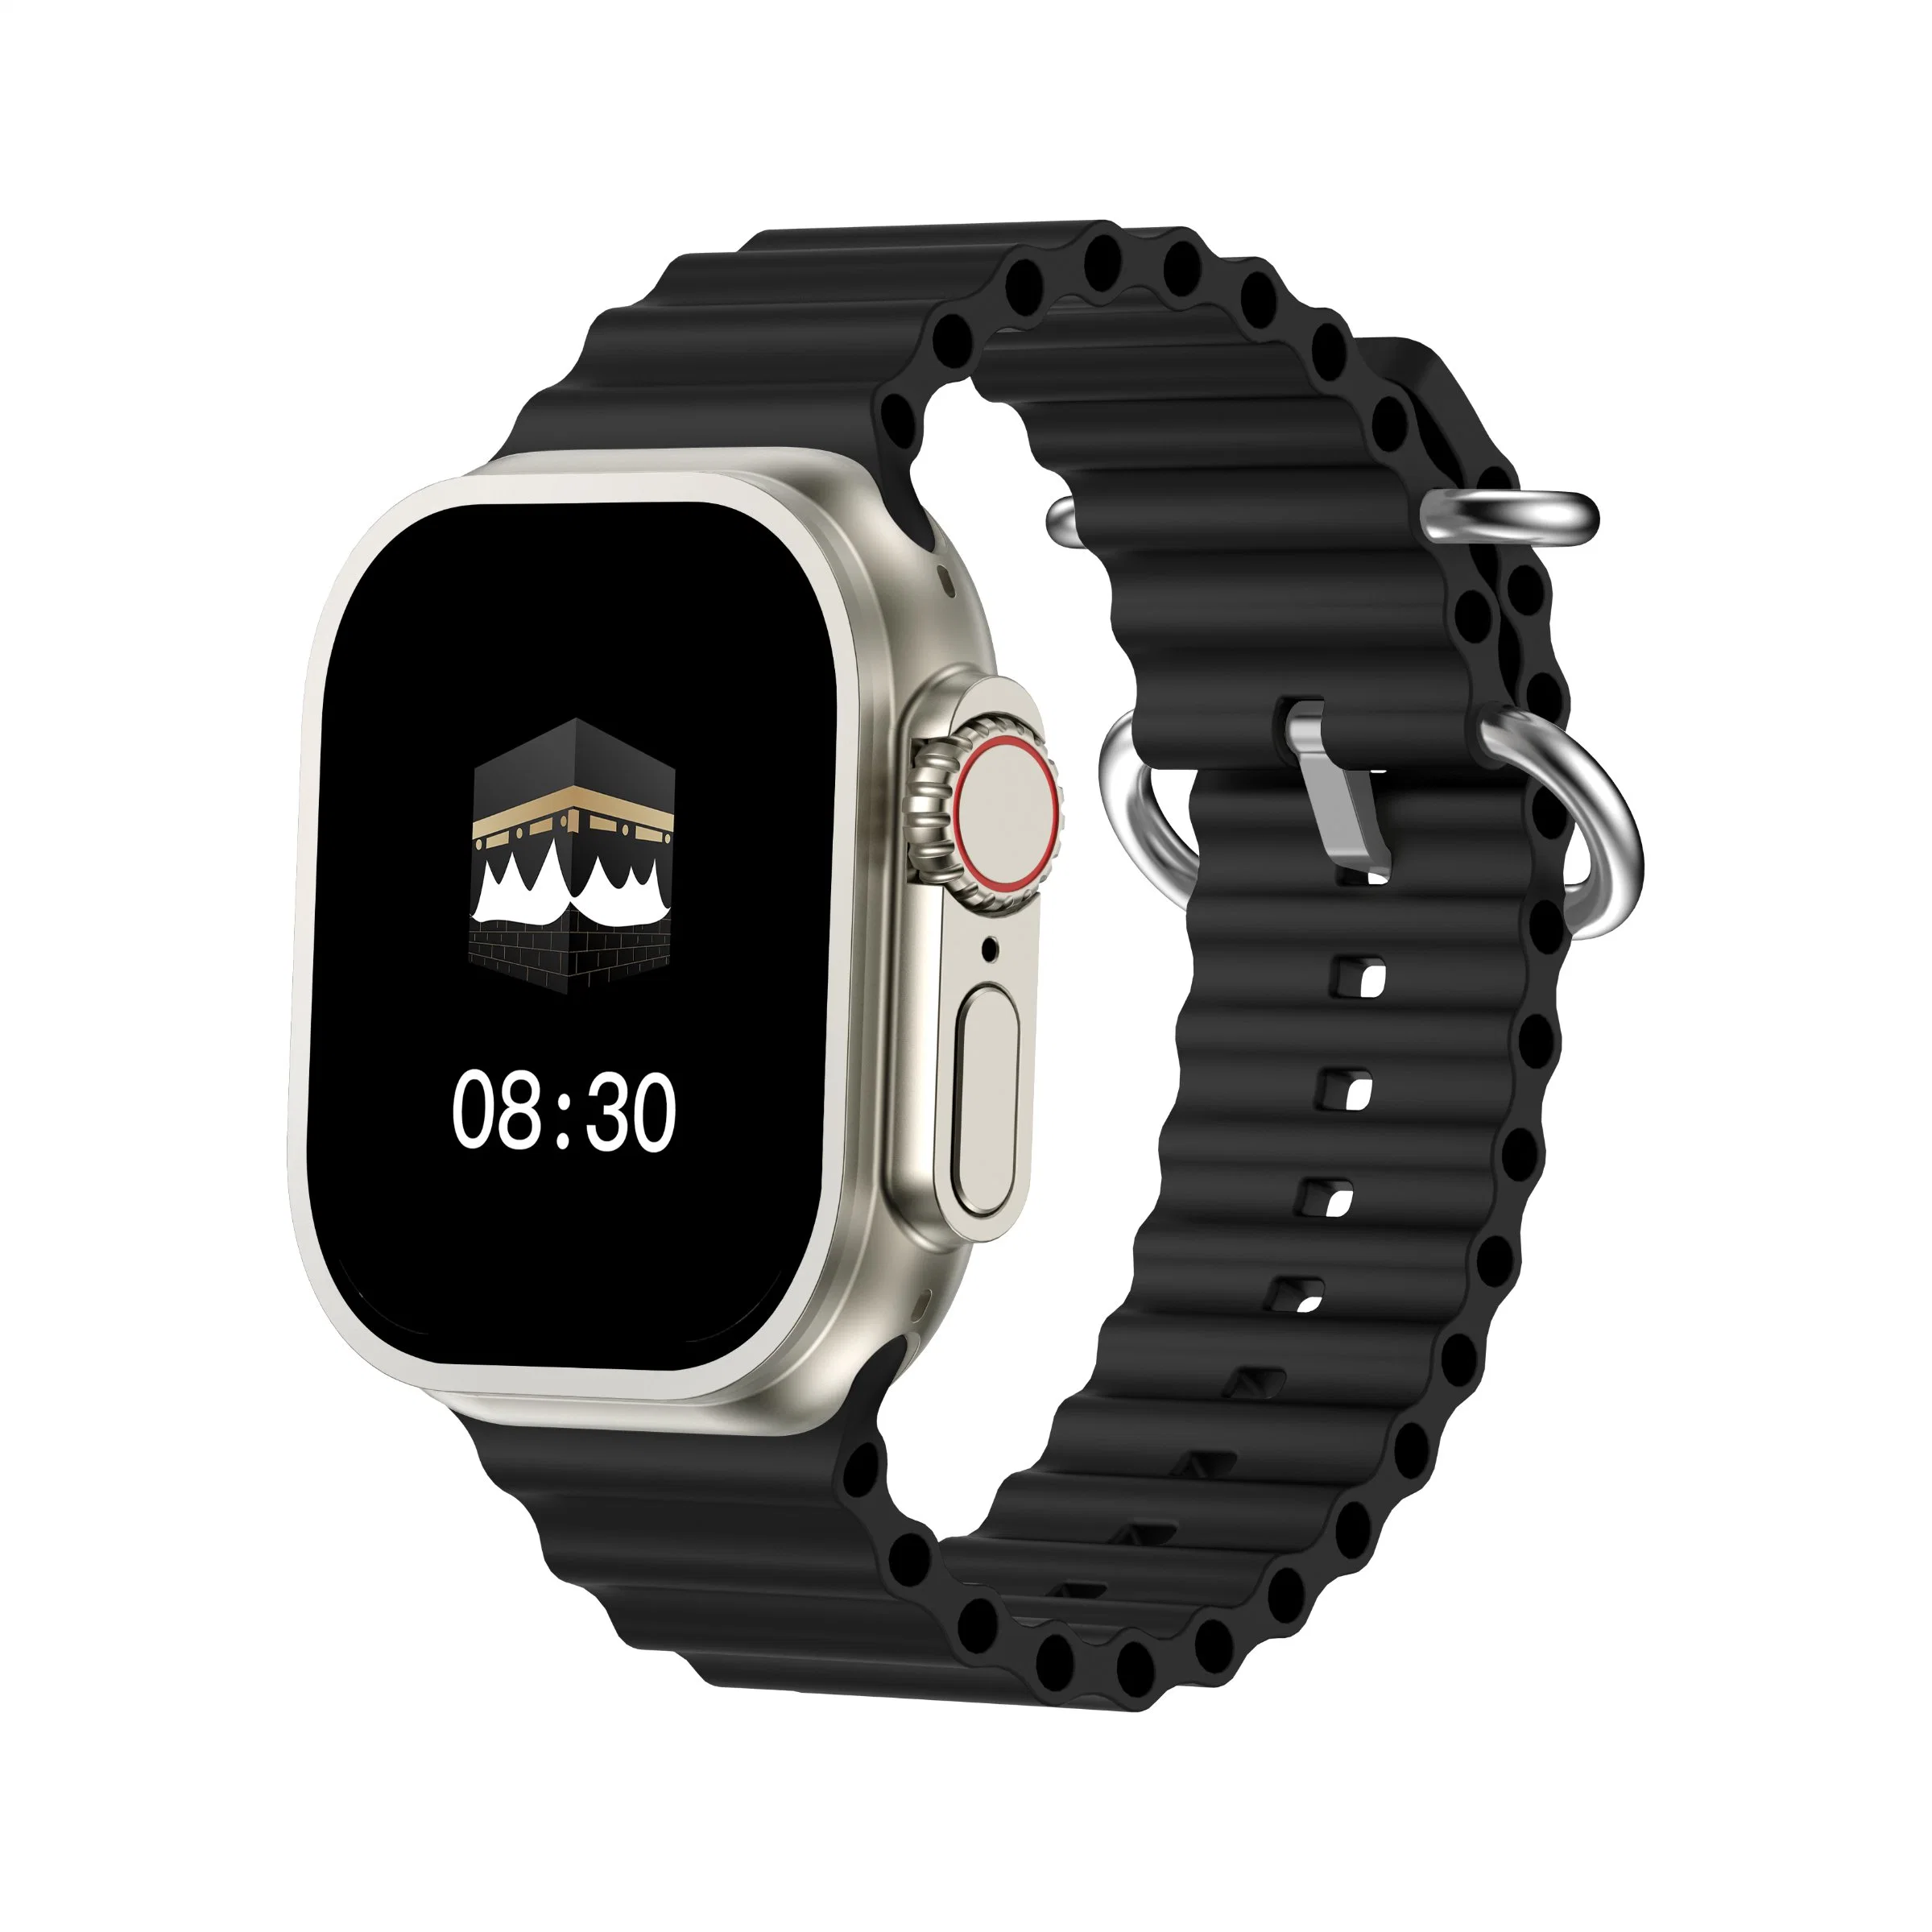 Alarma de culto musulmán Smartwatch Holy Kaaba Navigation Ultra Smart Watch